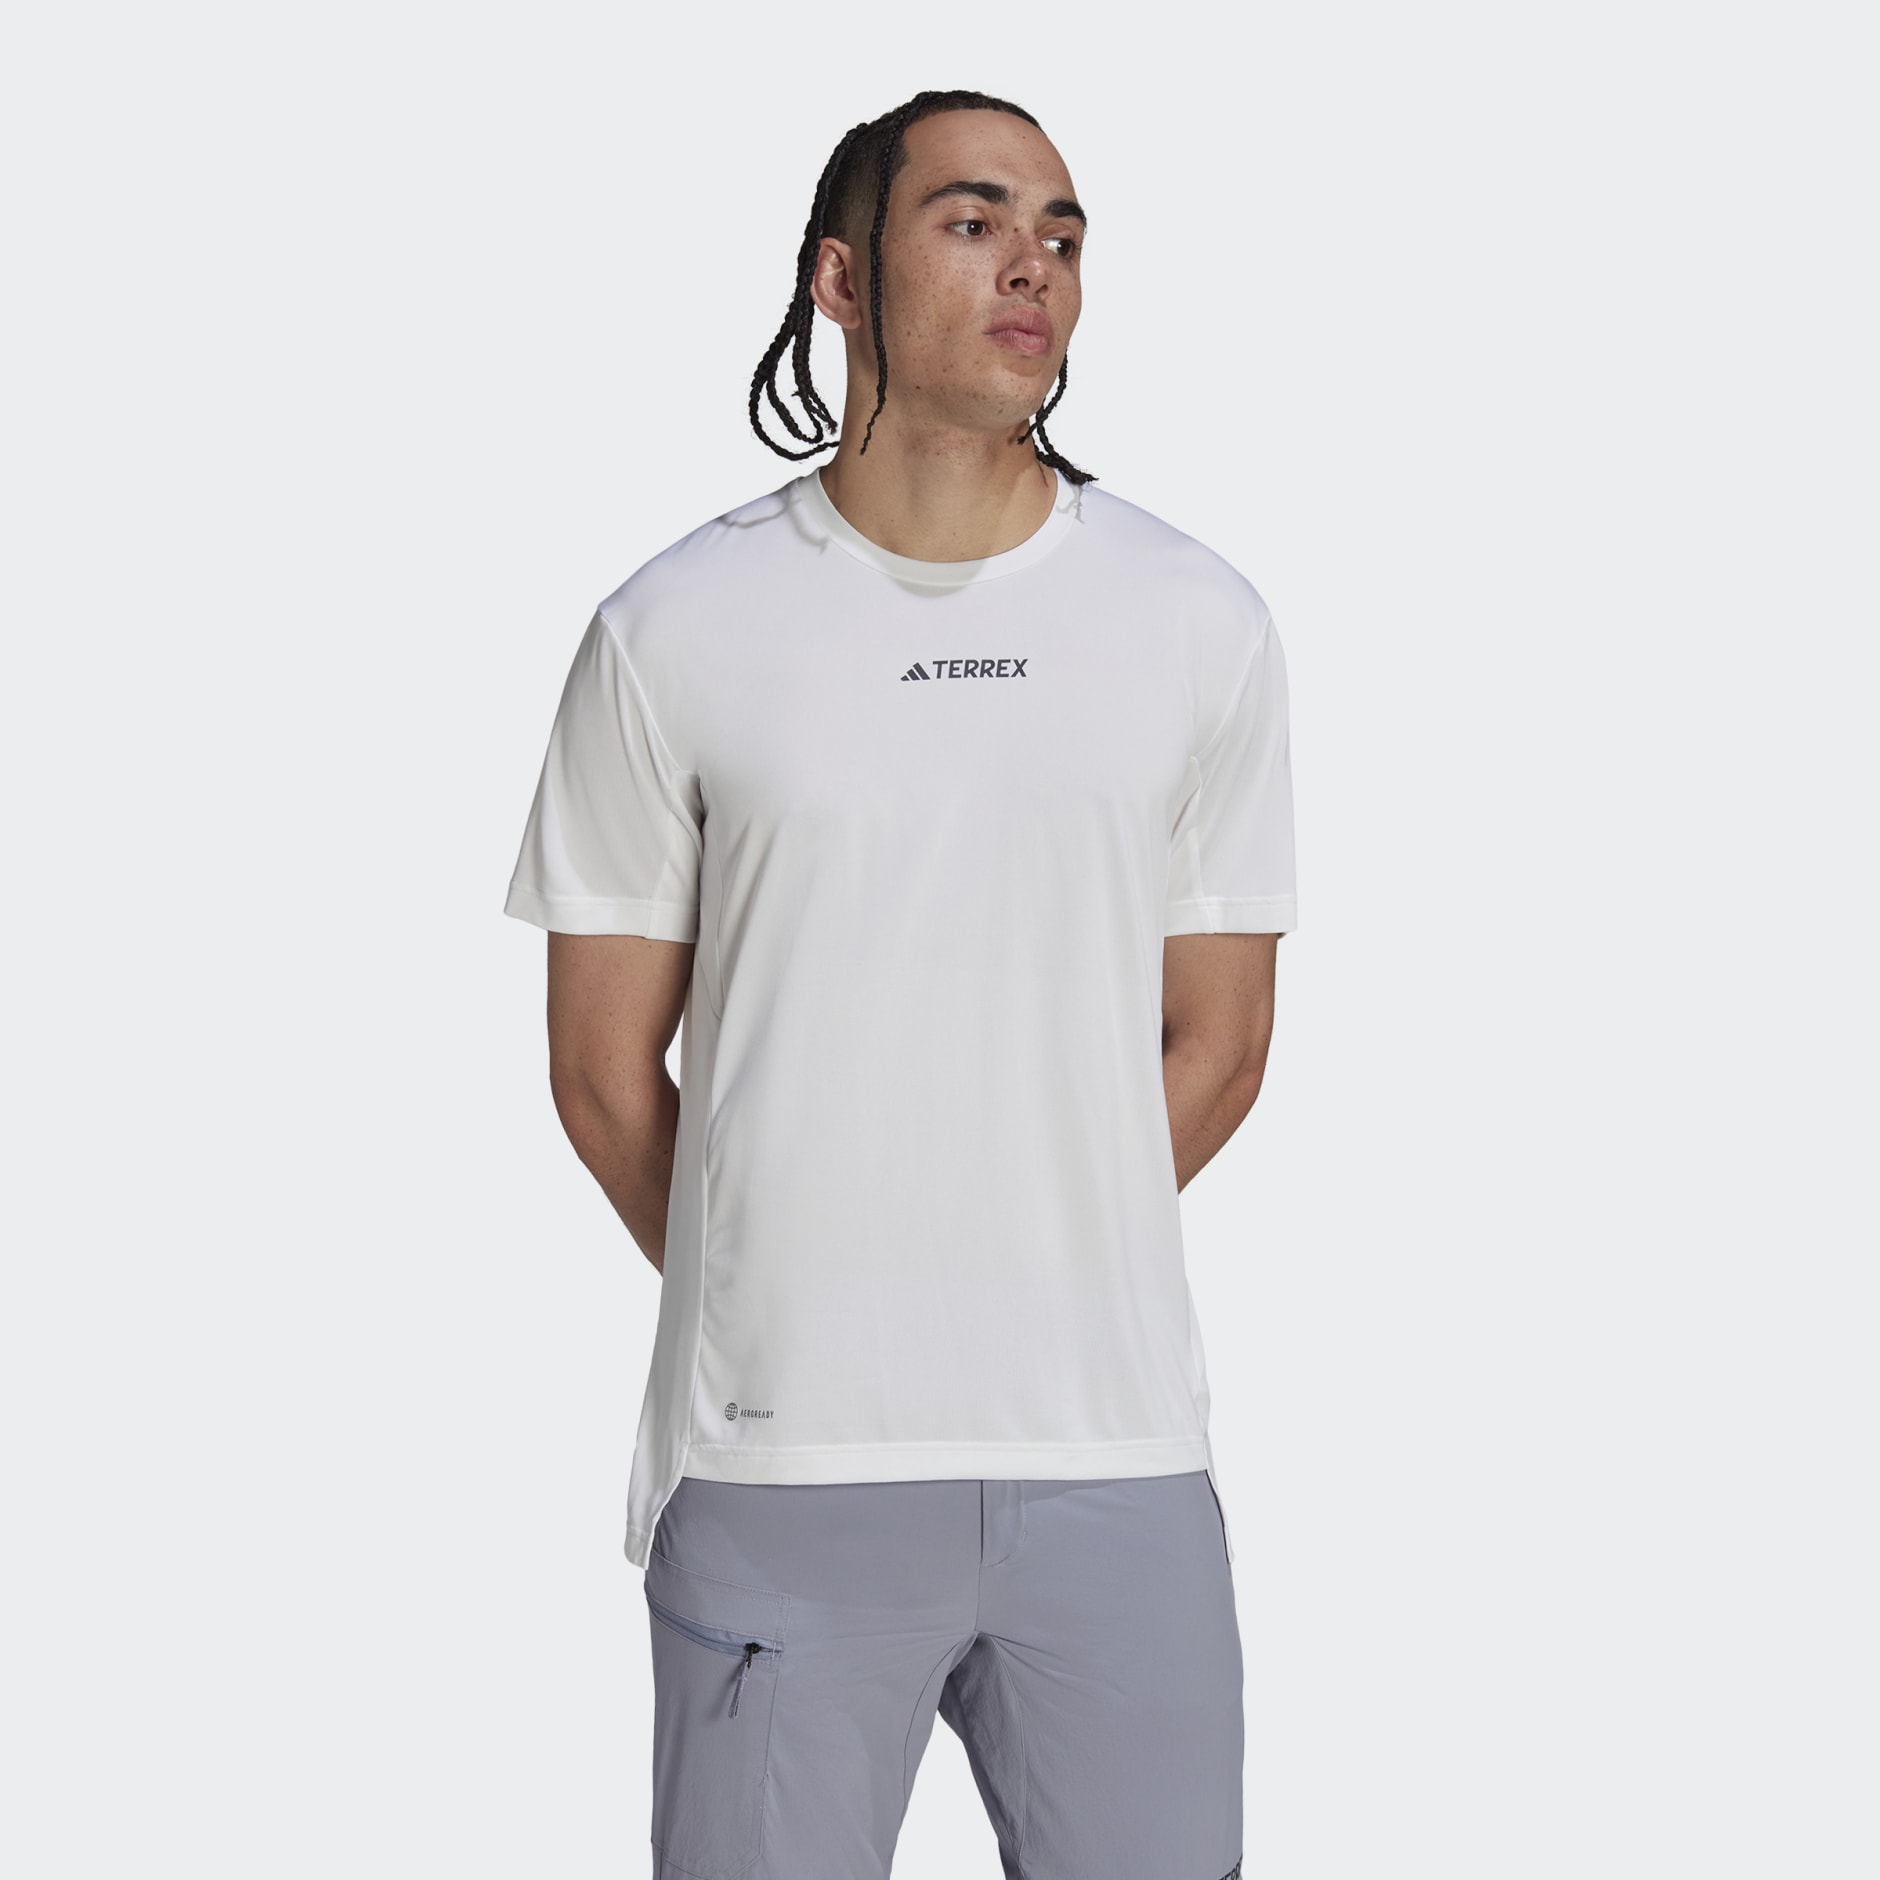 Clothing - Terrex Multi Tee - White | adidas South Africa